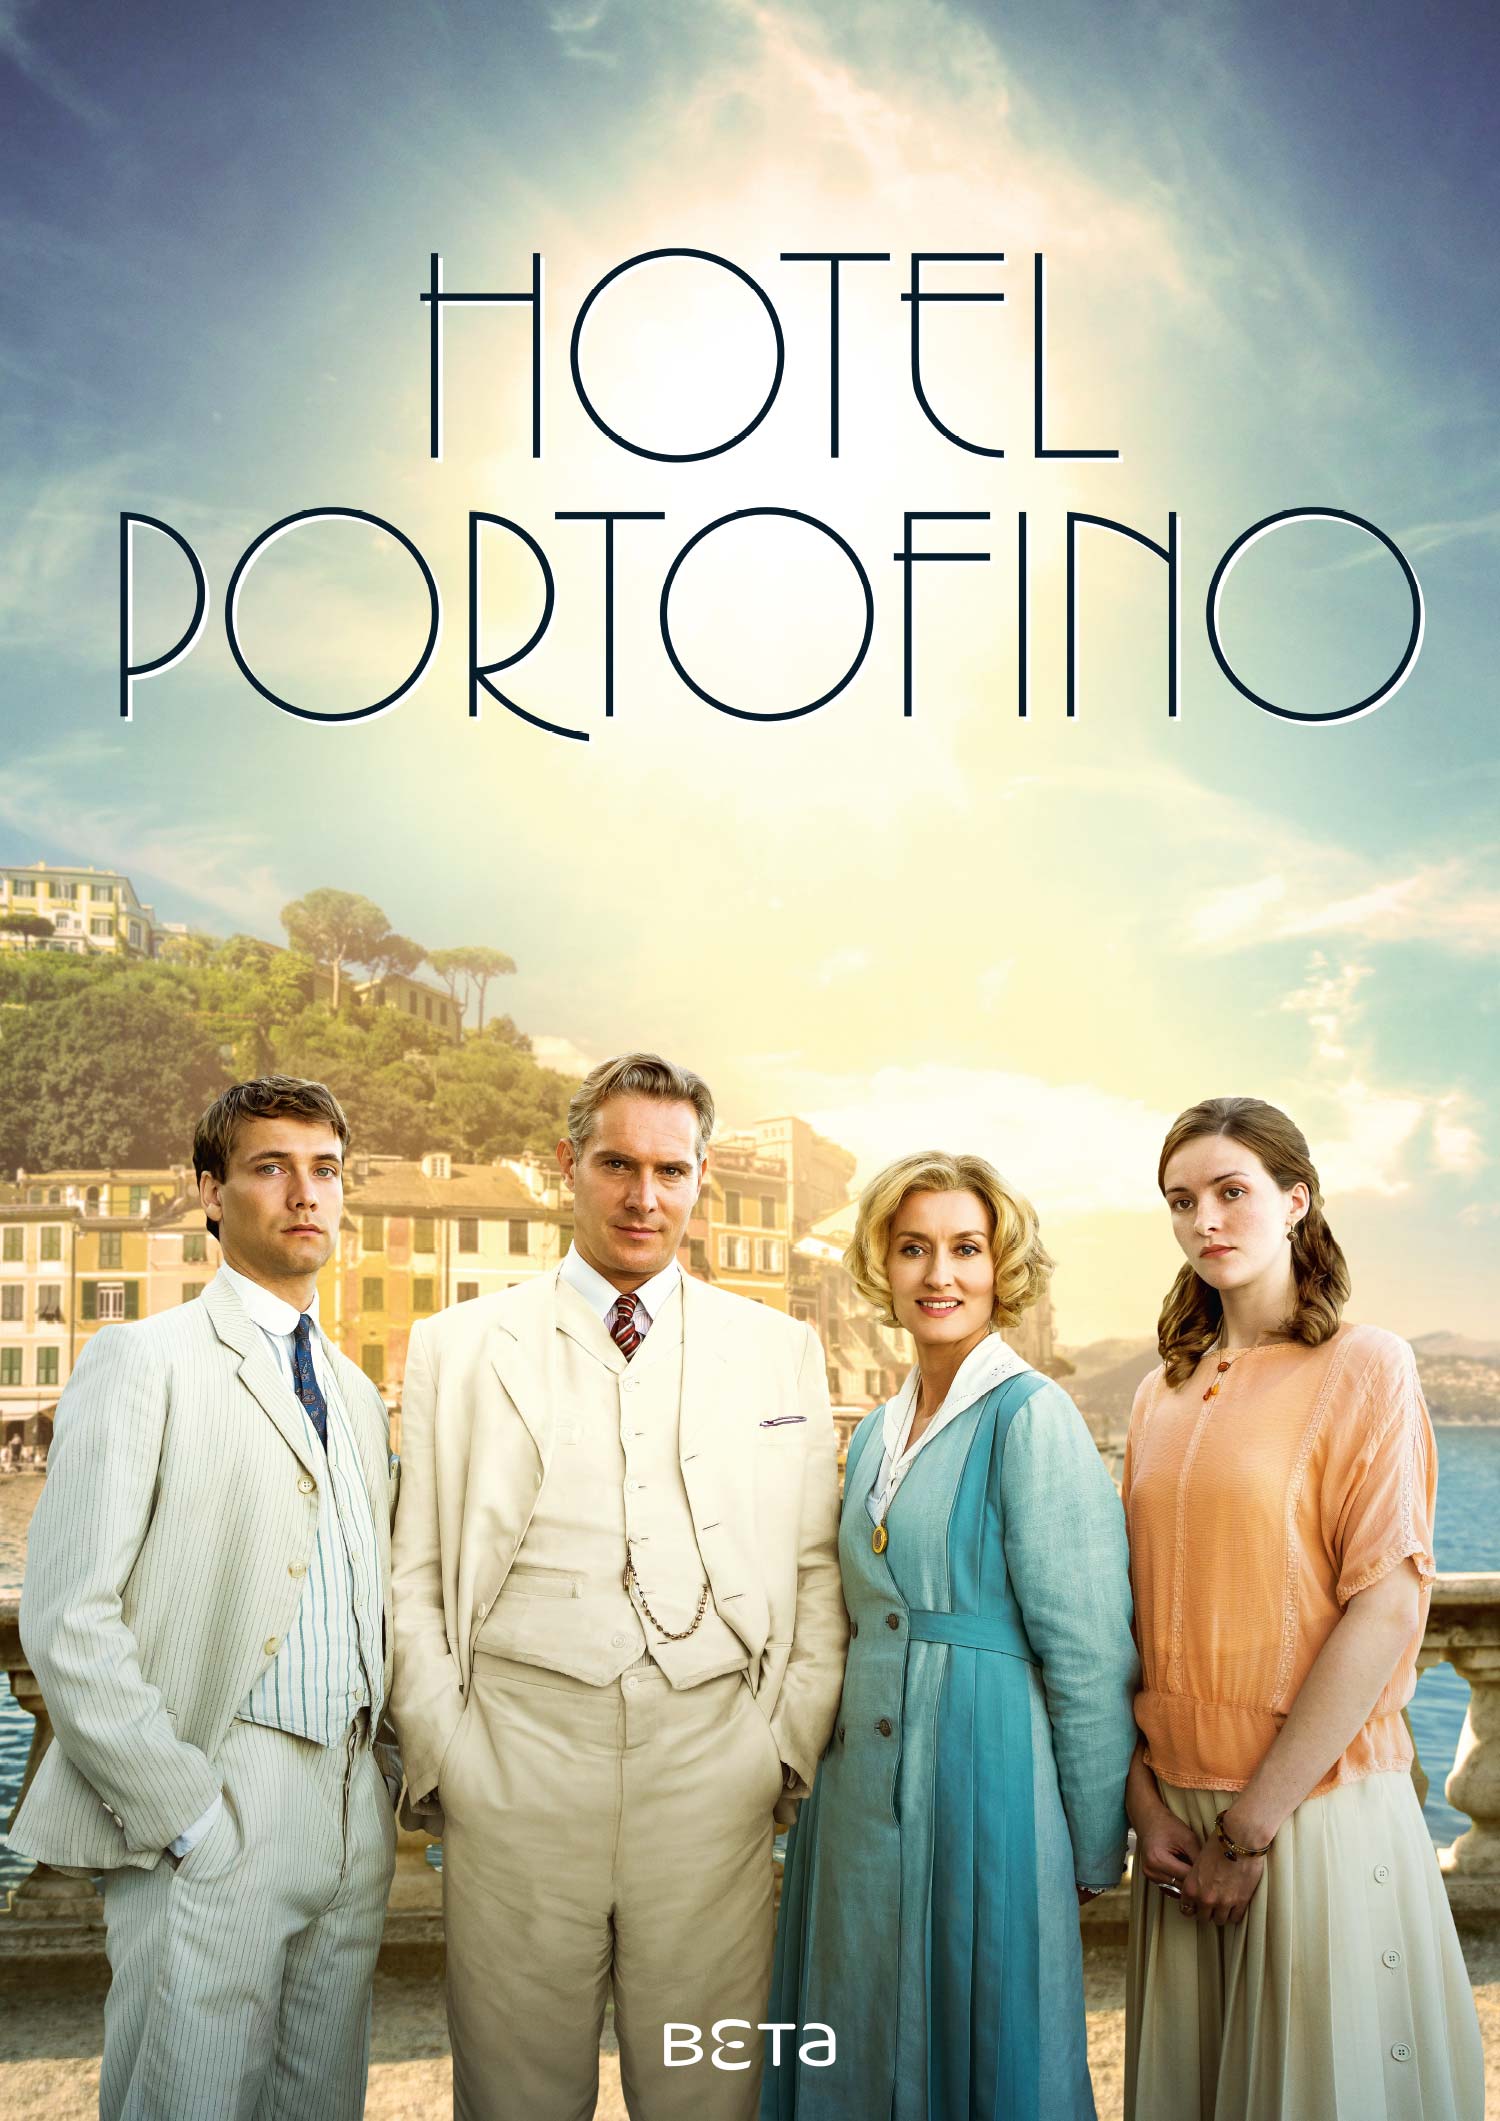 Beta_HotelPortofino_1500x2121